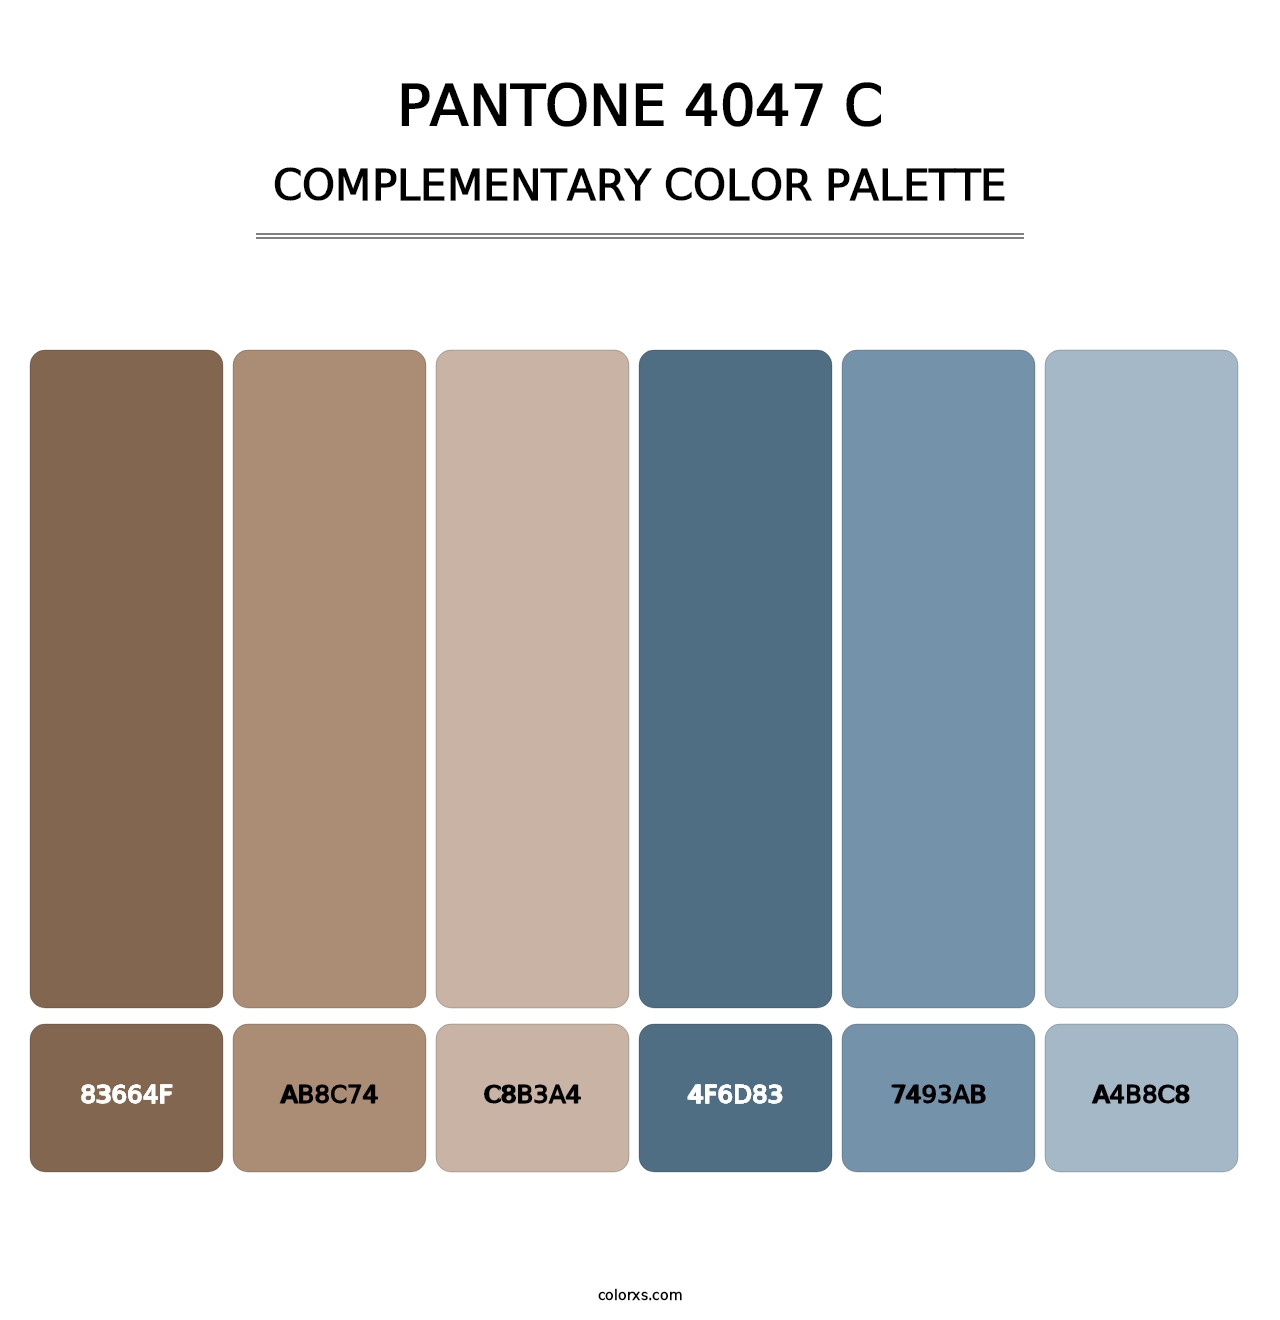 PANTONE 4047 C - Complementary Color Palette